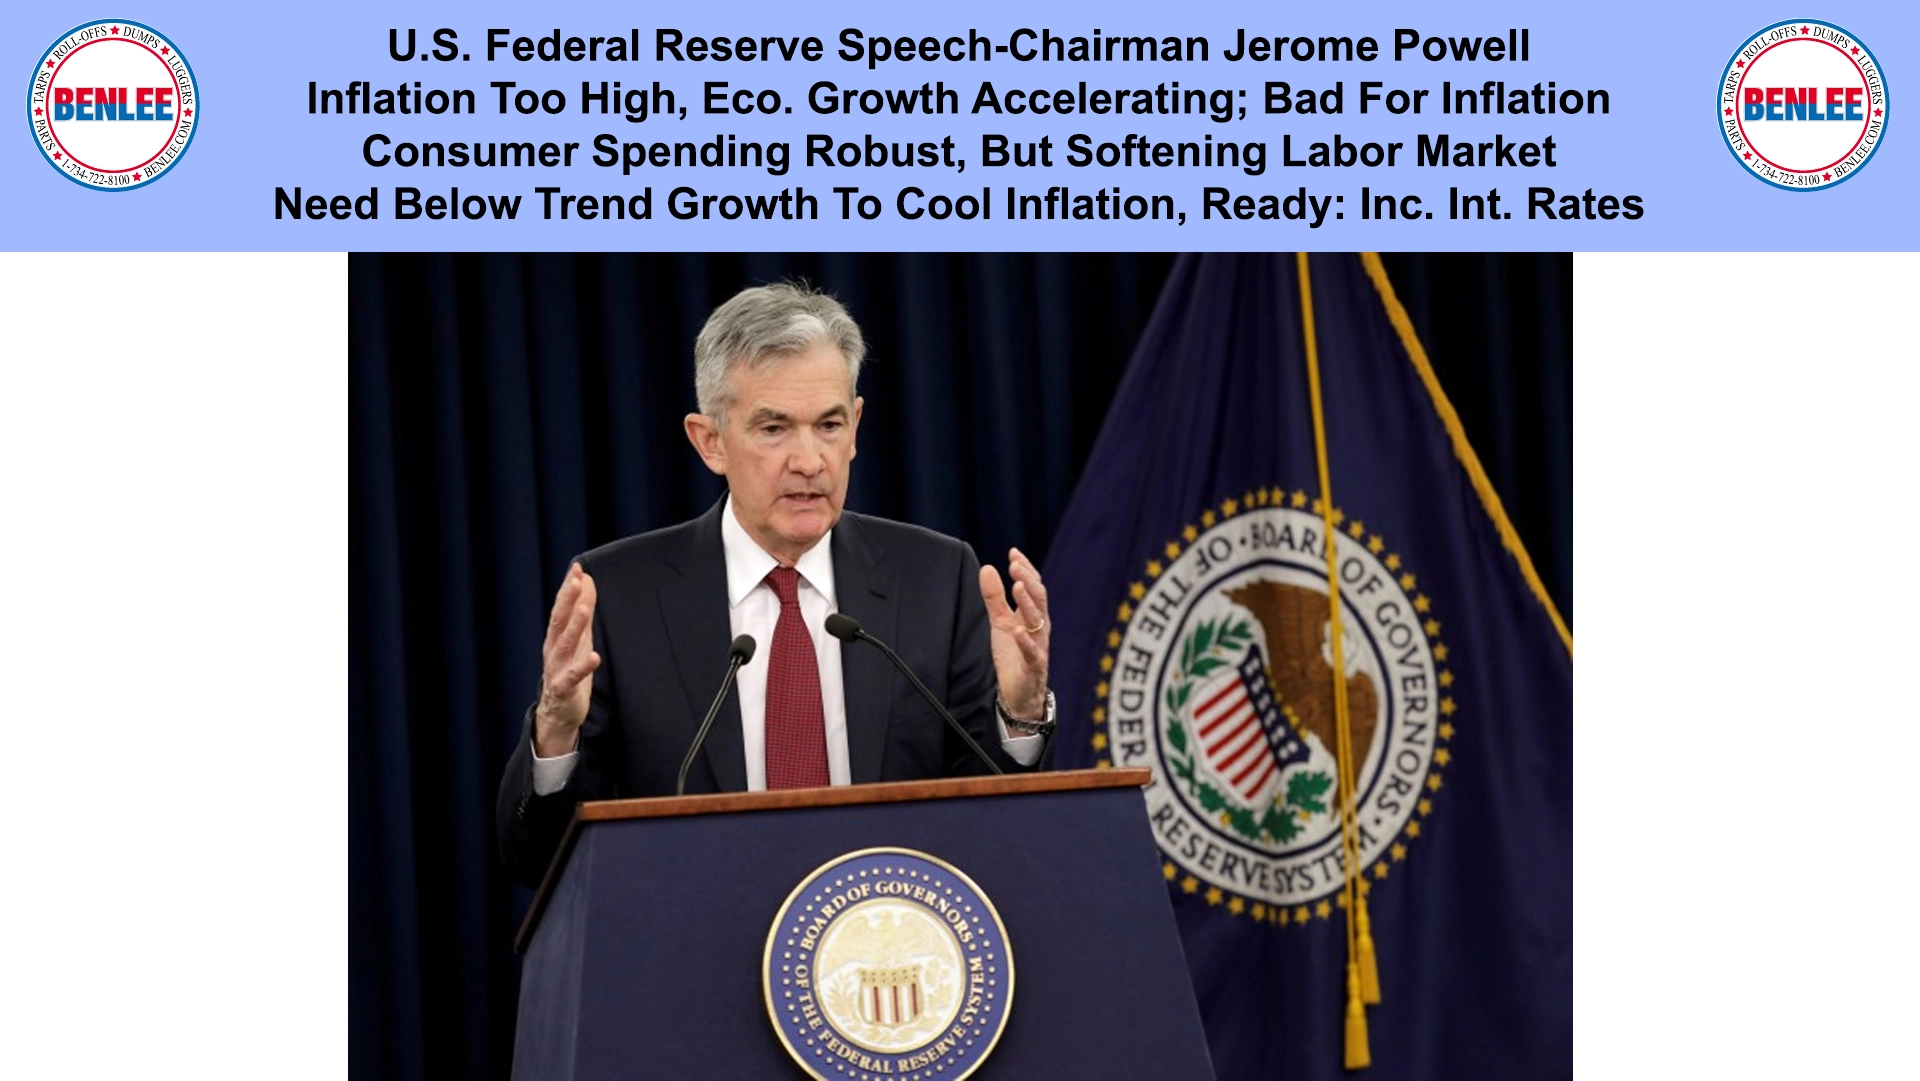 U.S. Federal Reserve Speech